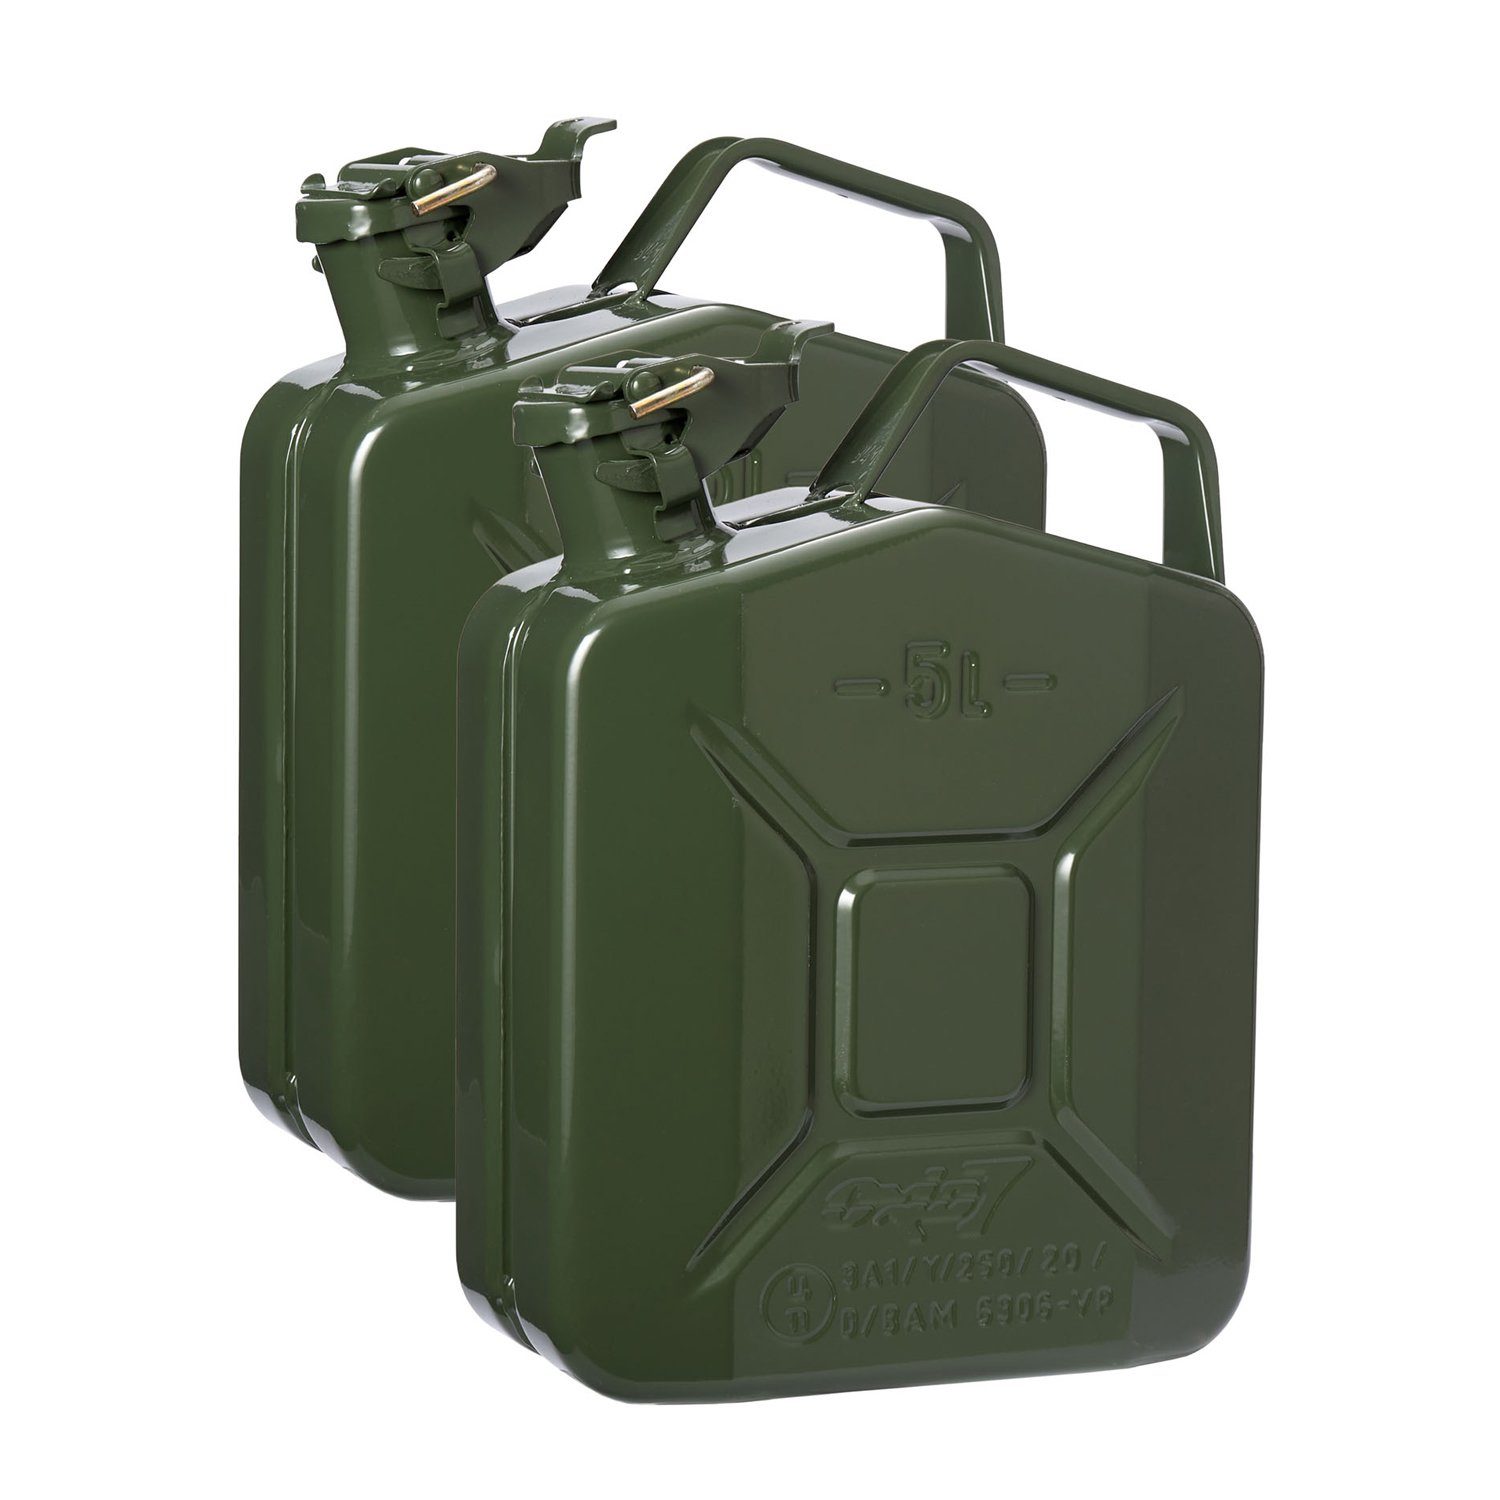 Oxid7 Benzinkanister Metall Kraftstoffkanister olivgrün 5L (2 St), Reservekanister Diesel Benzin Ölkanister Heizöl Wasser